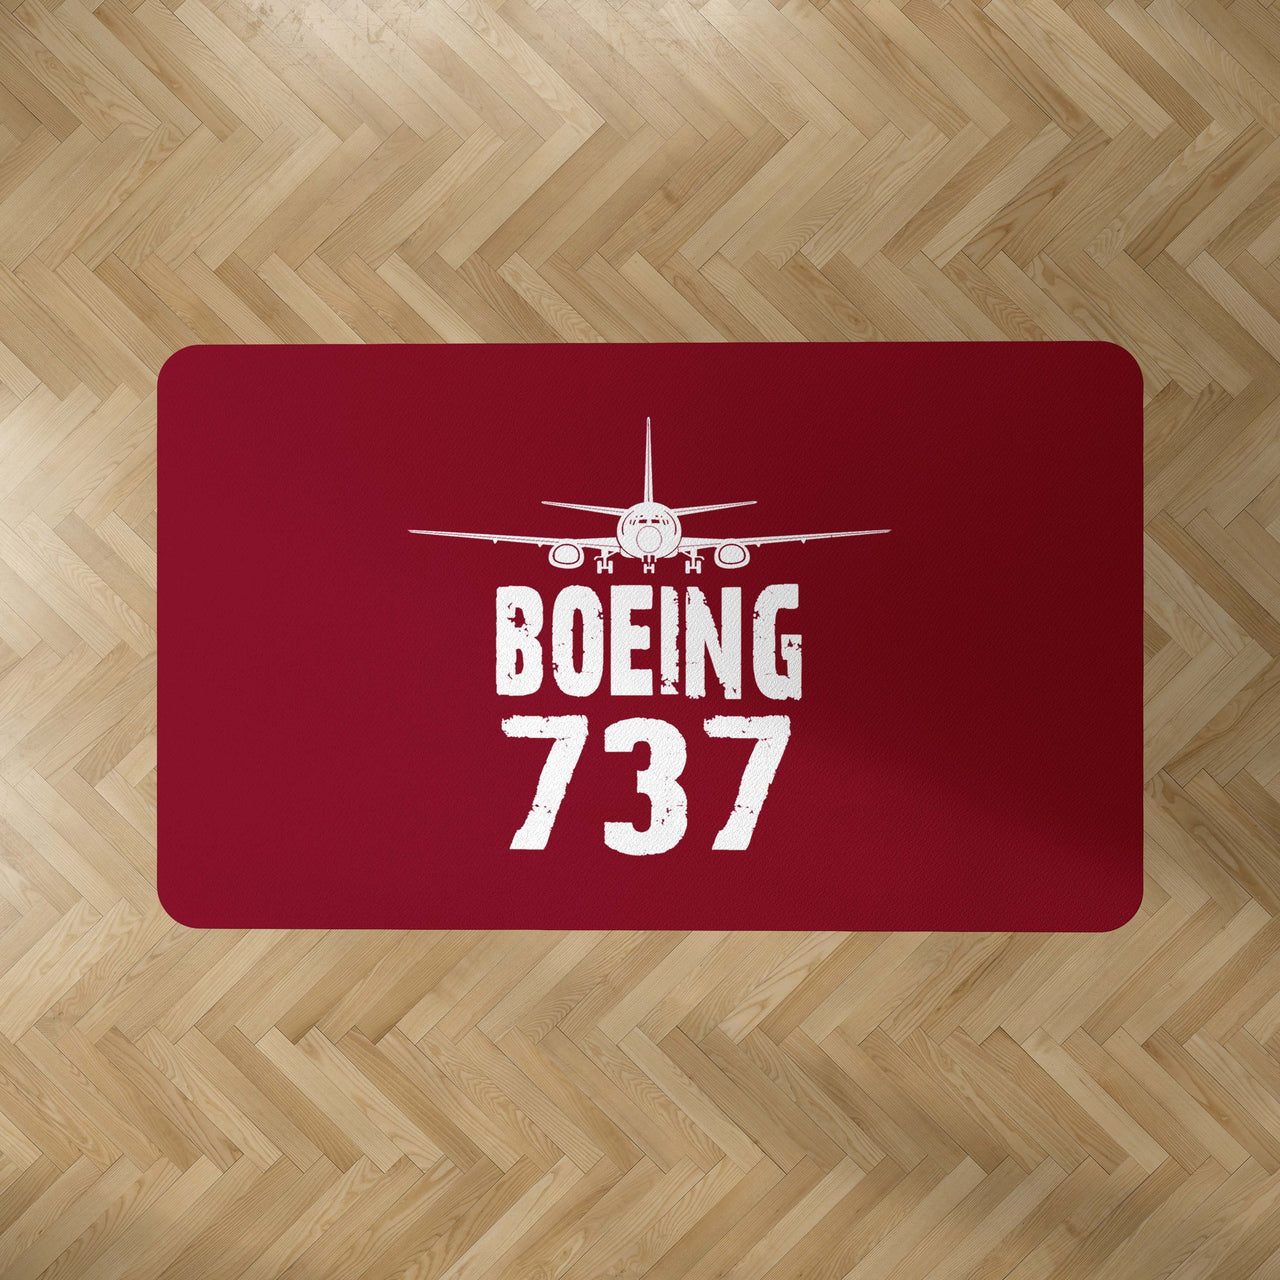 Boeing 737 & Plane Designed Carpet & Floor Mats